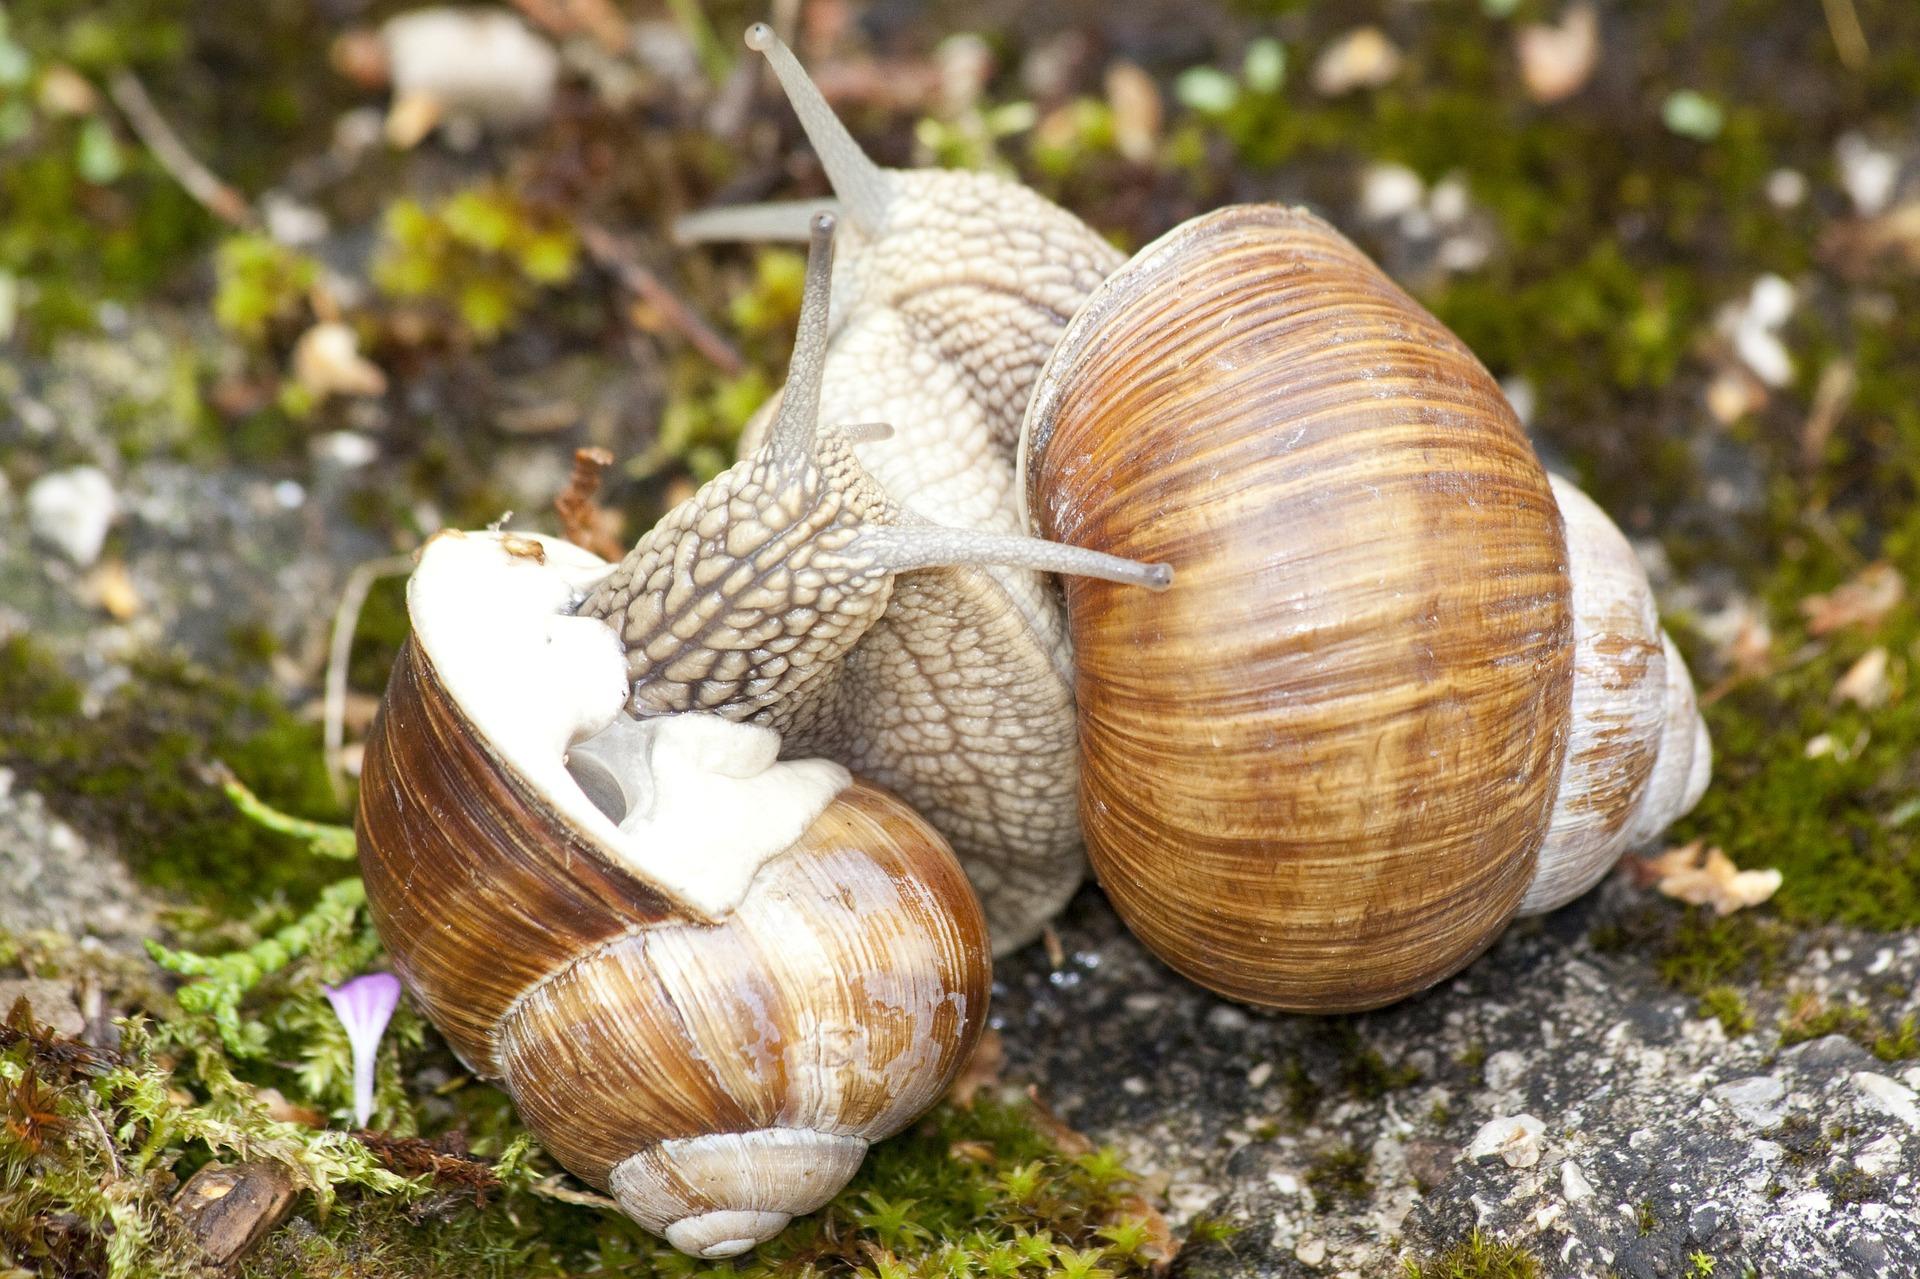 snails - image